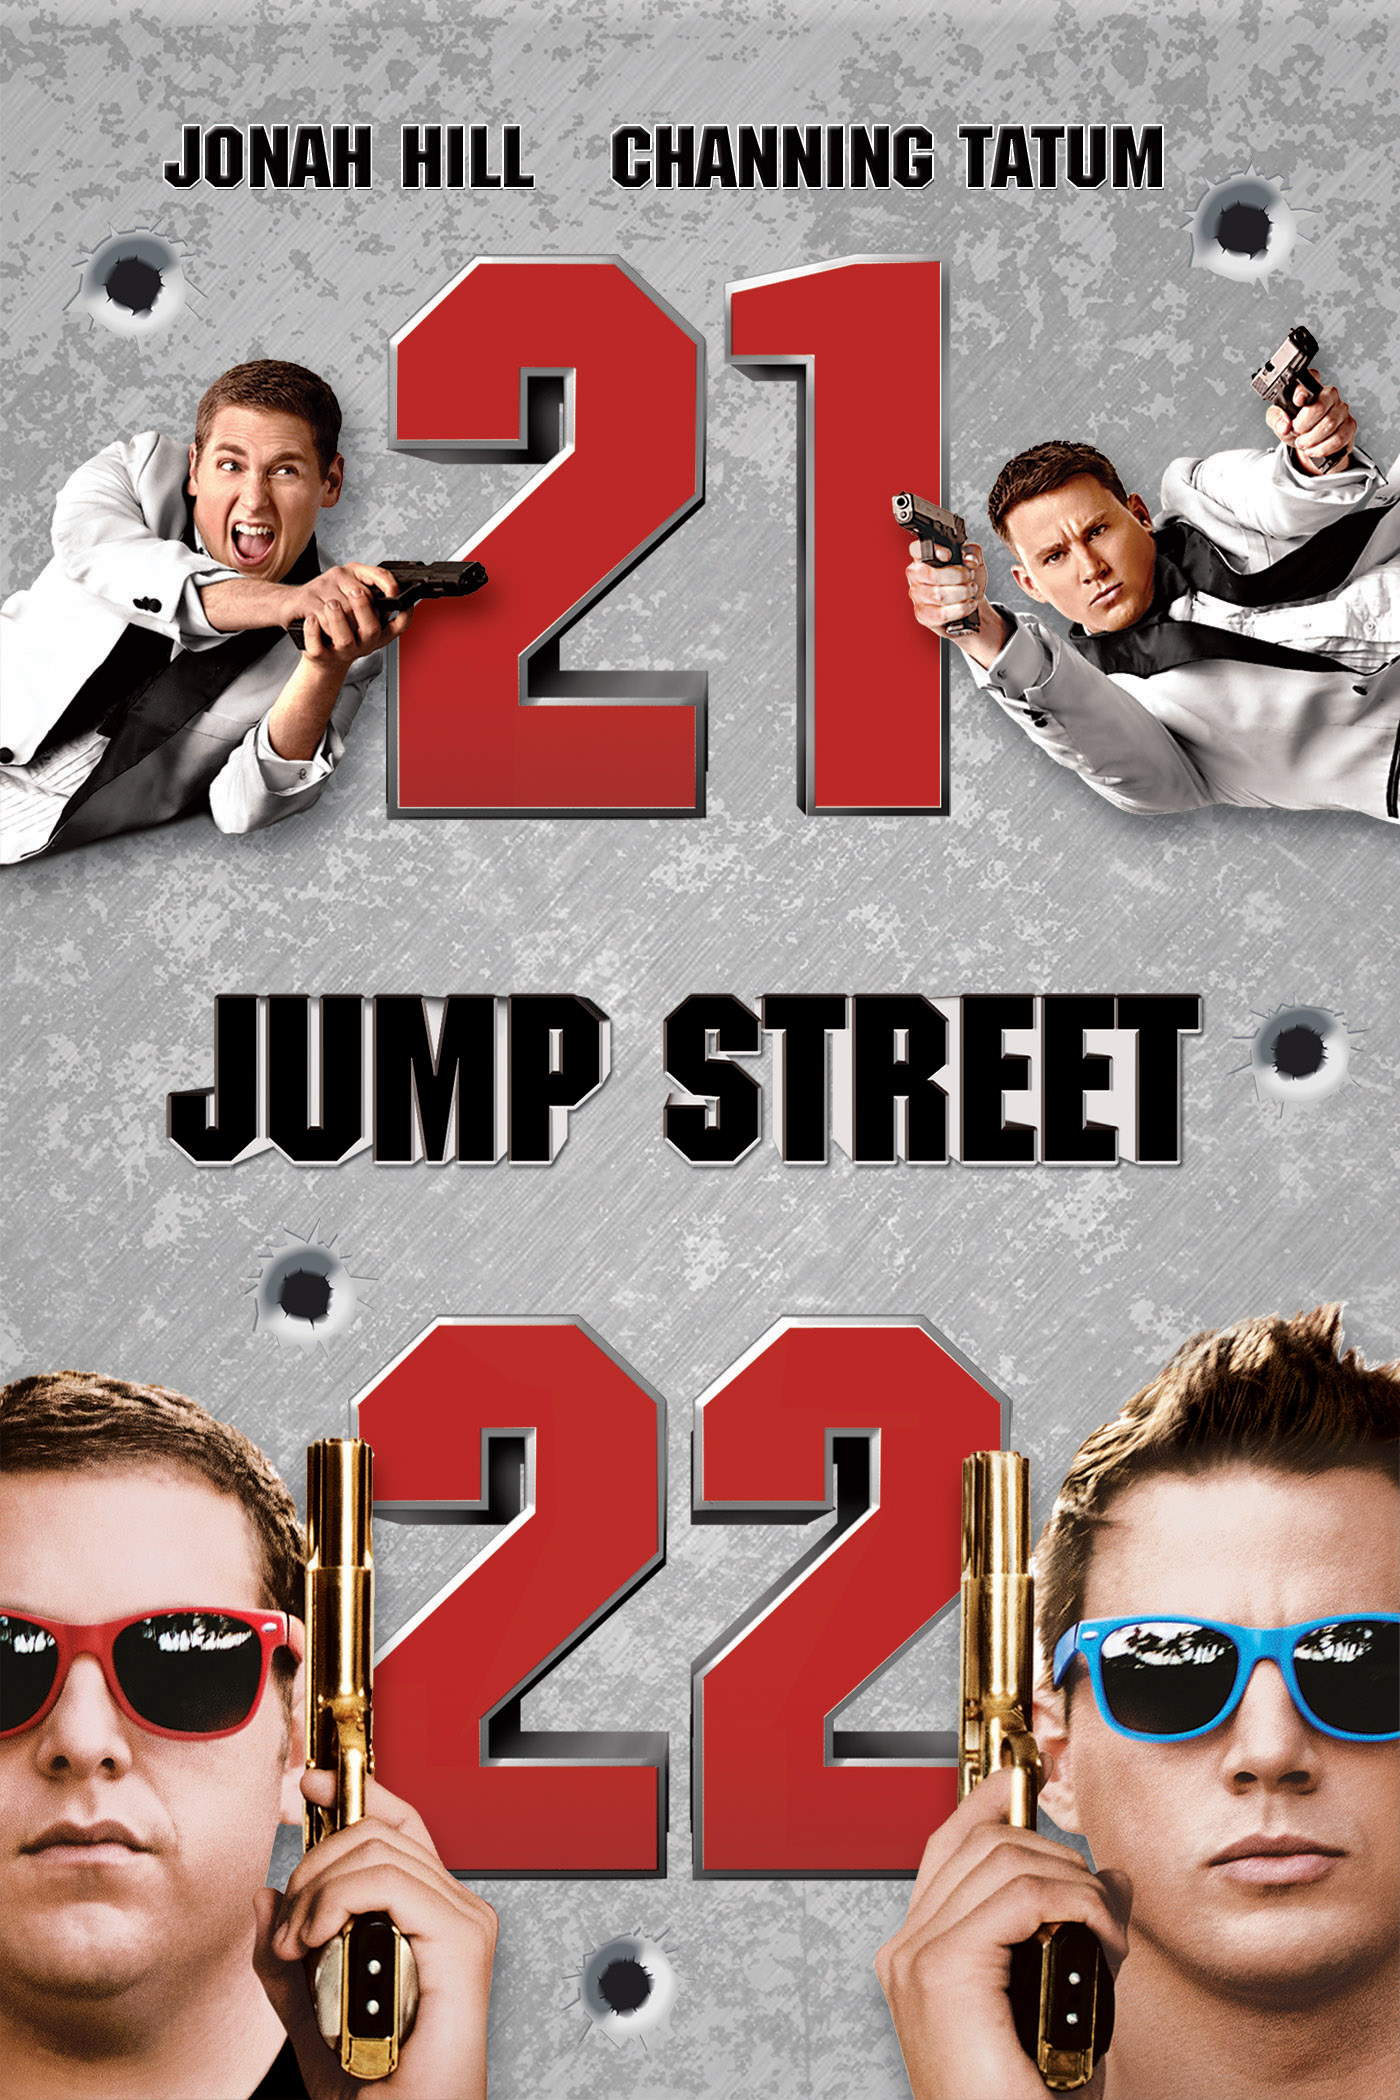 21 jump street full movie hd openload